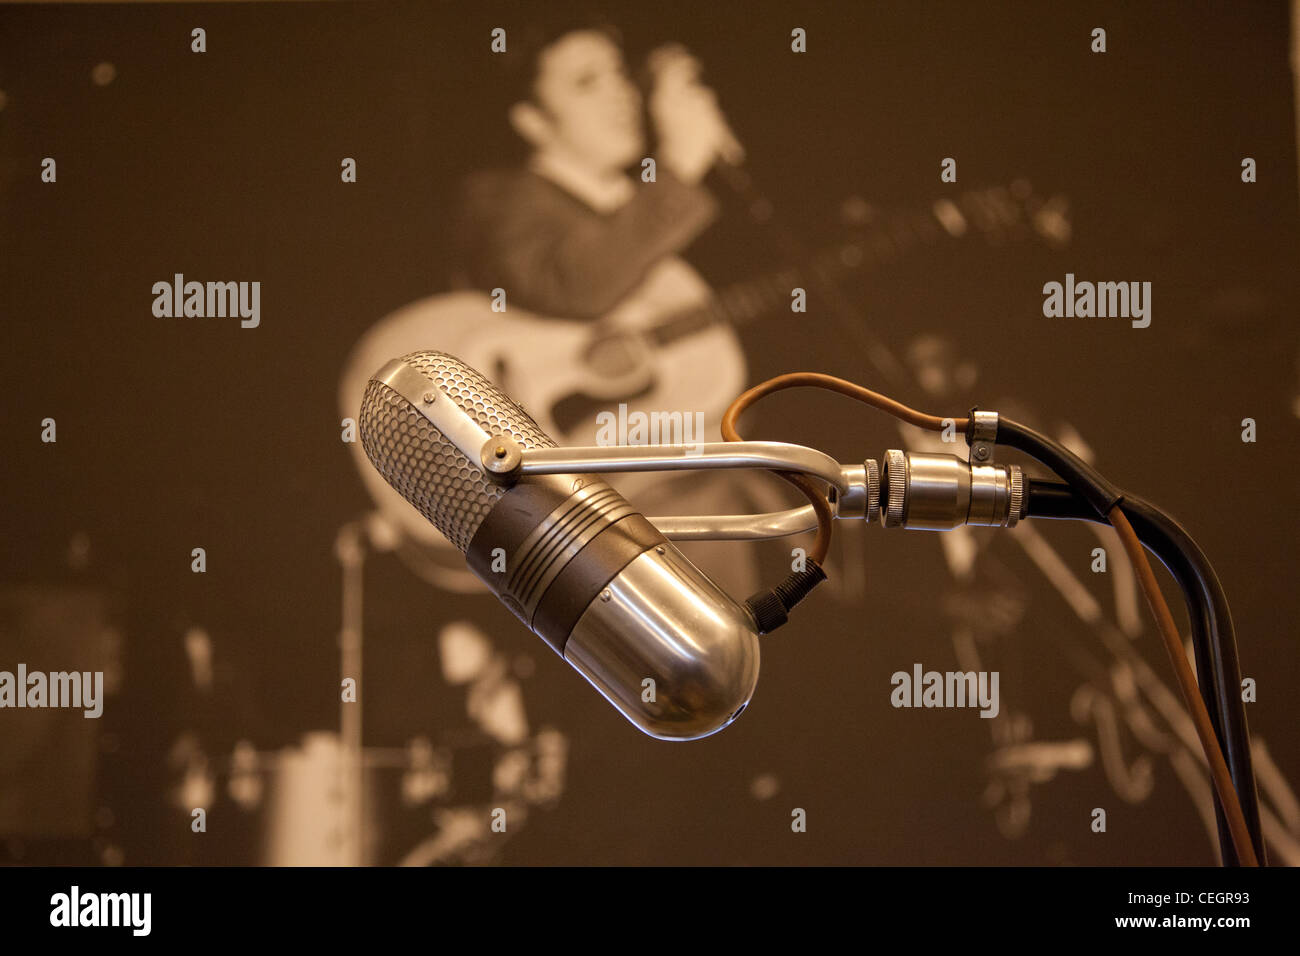 Elvis presley mikrofon -Fotos und -Bildmaterial in hoher Auflösung – Alamy